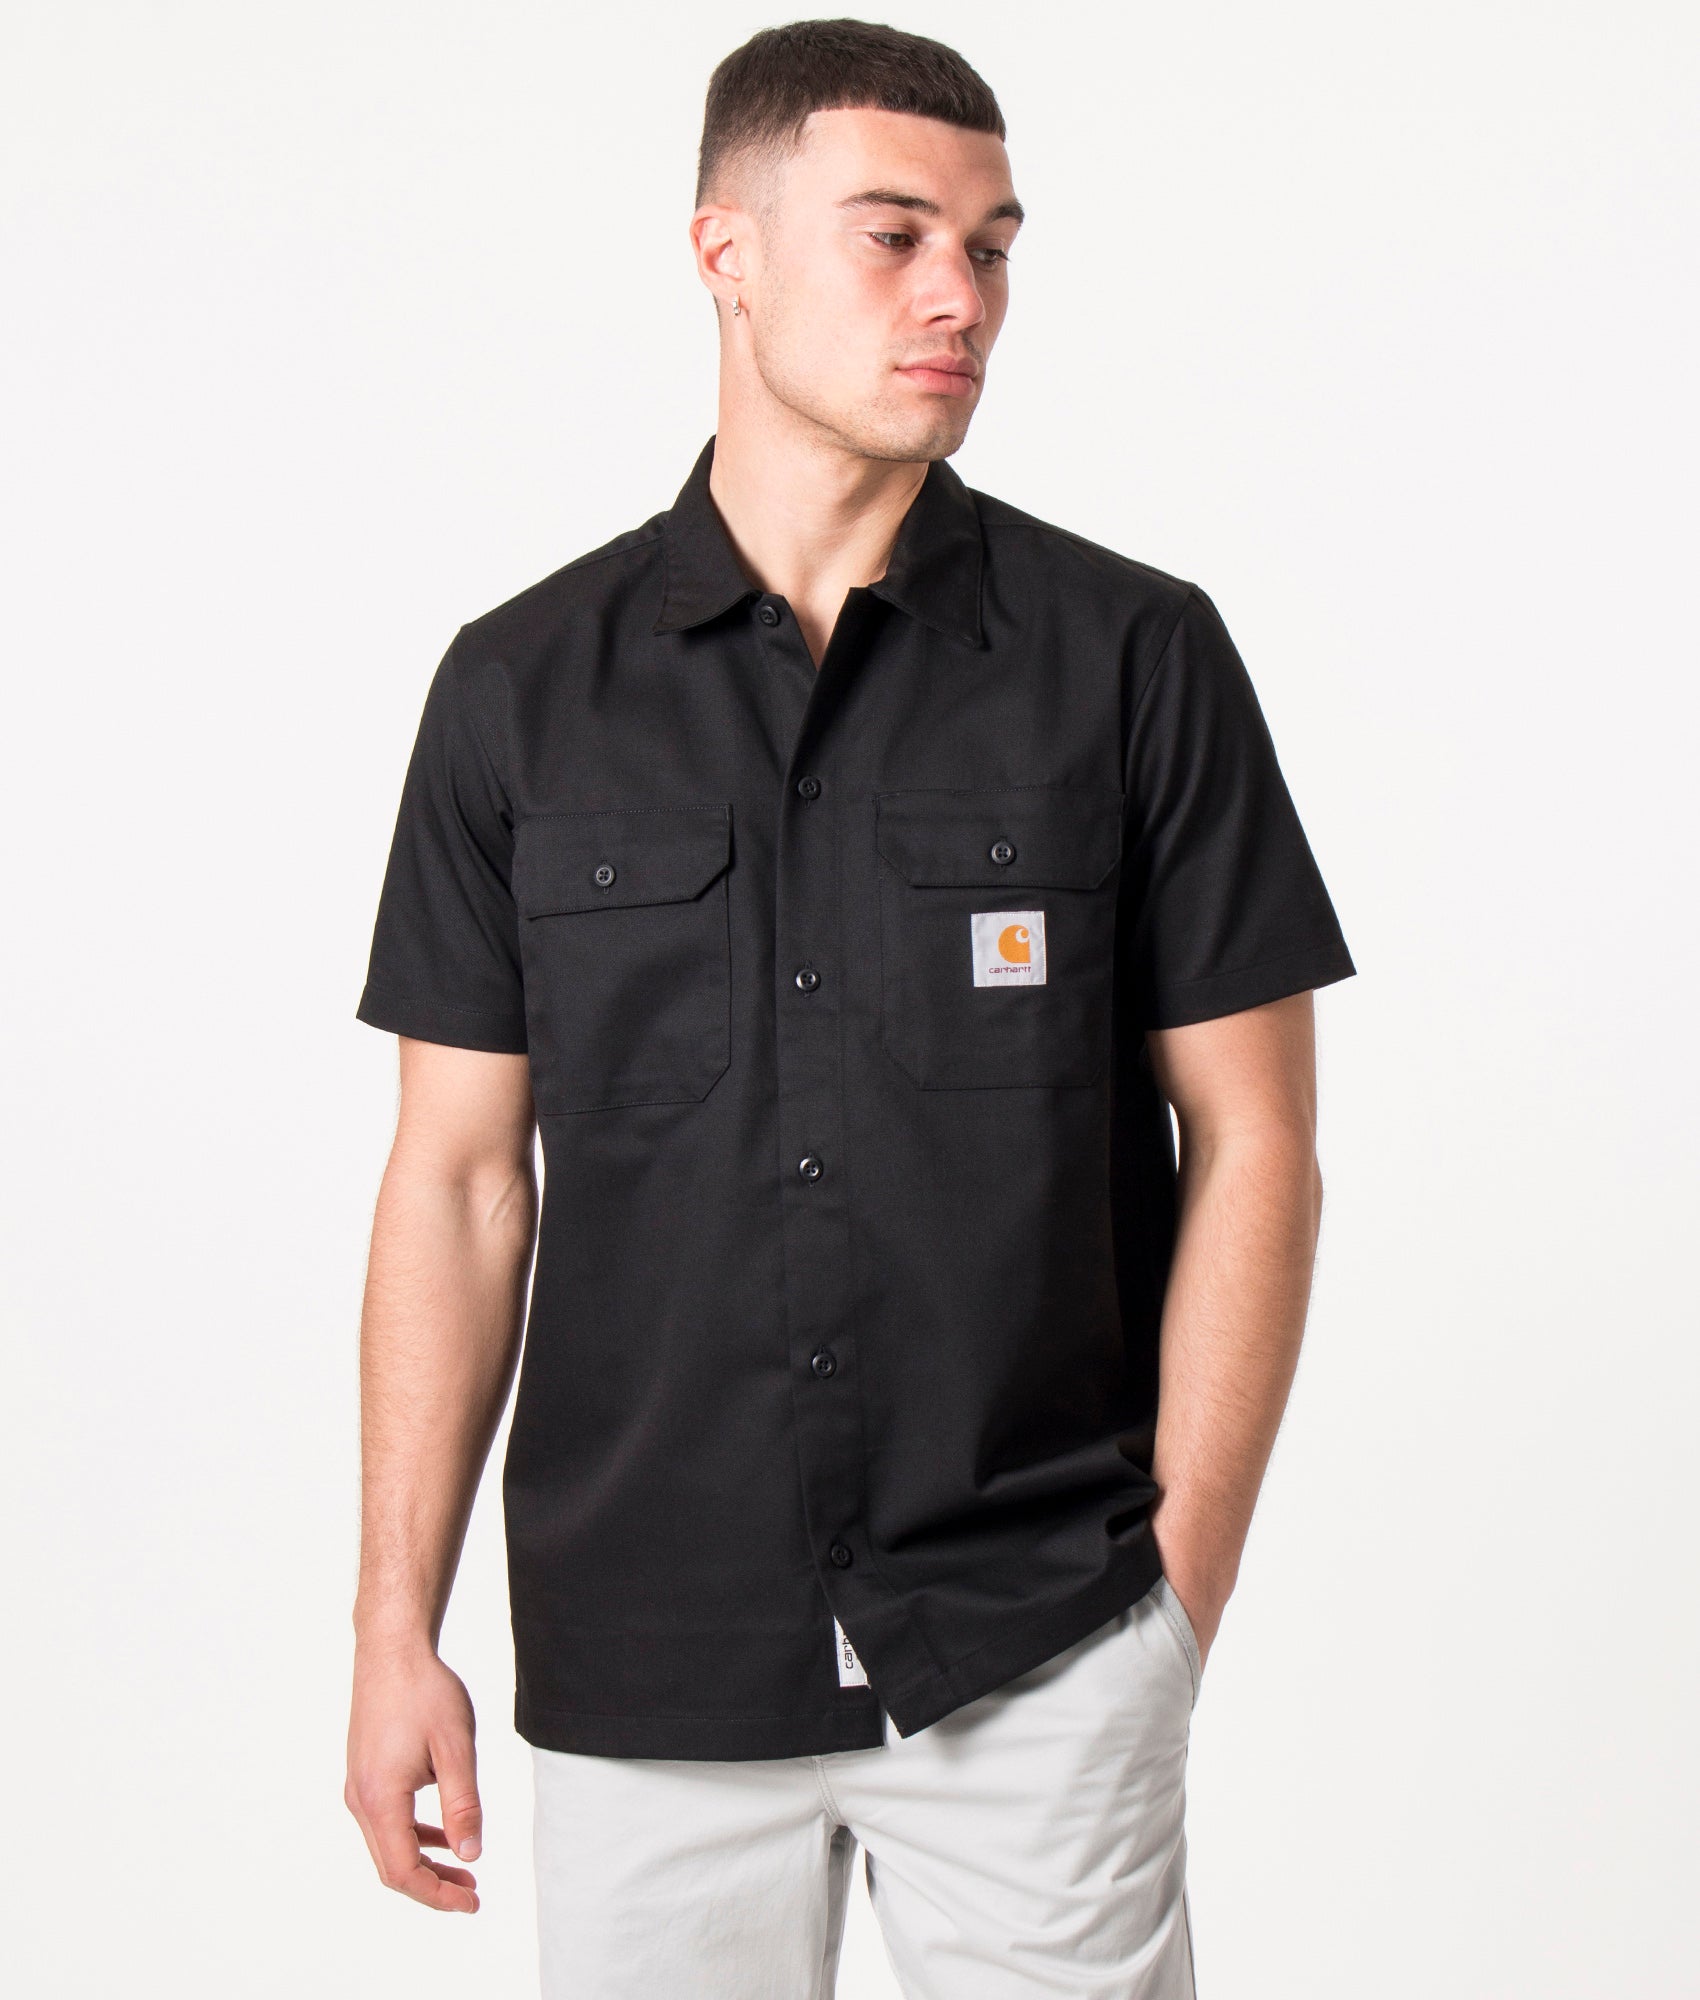 Carhartt Short Sleeve Shirts on Sale | bellvalefarms.com